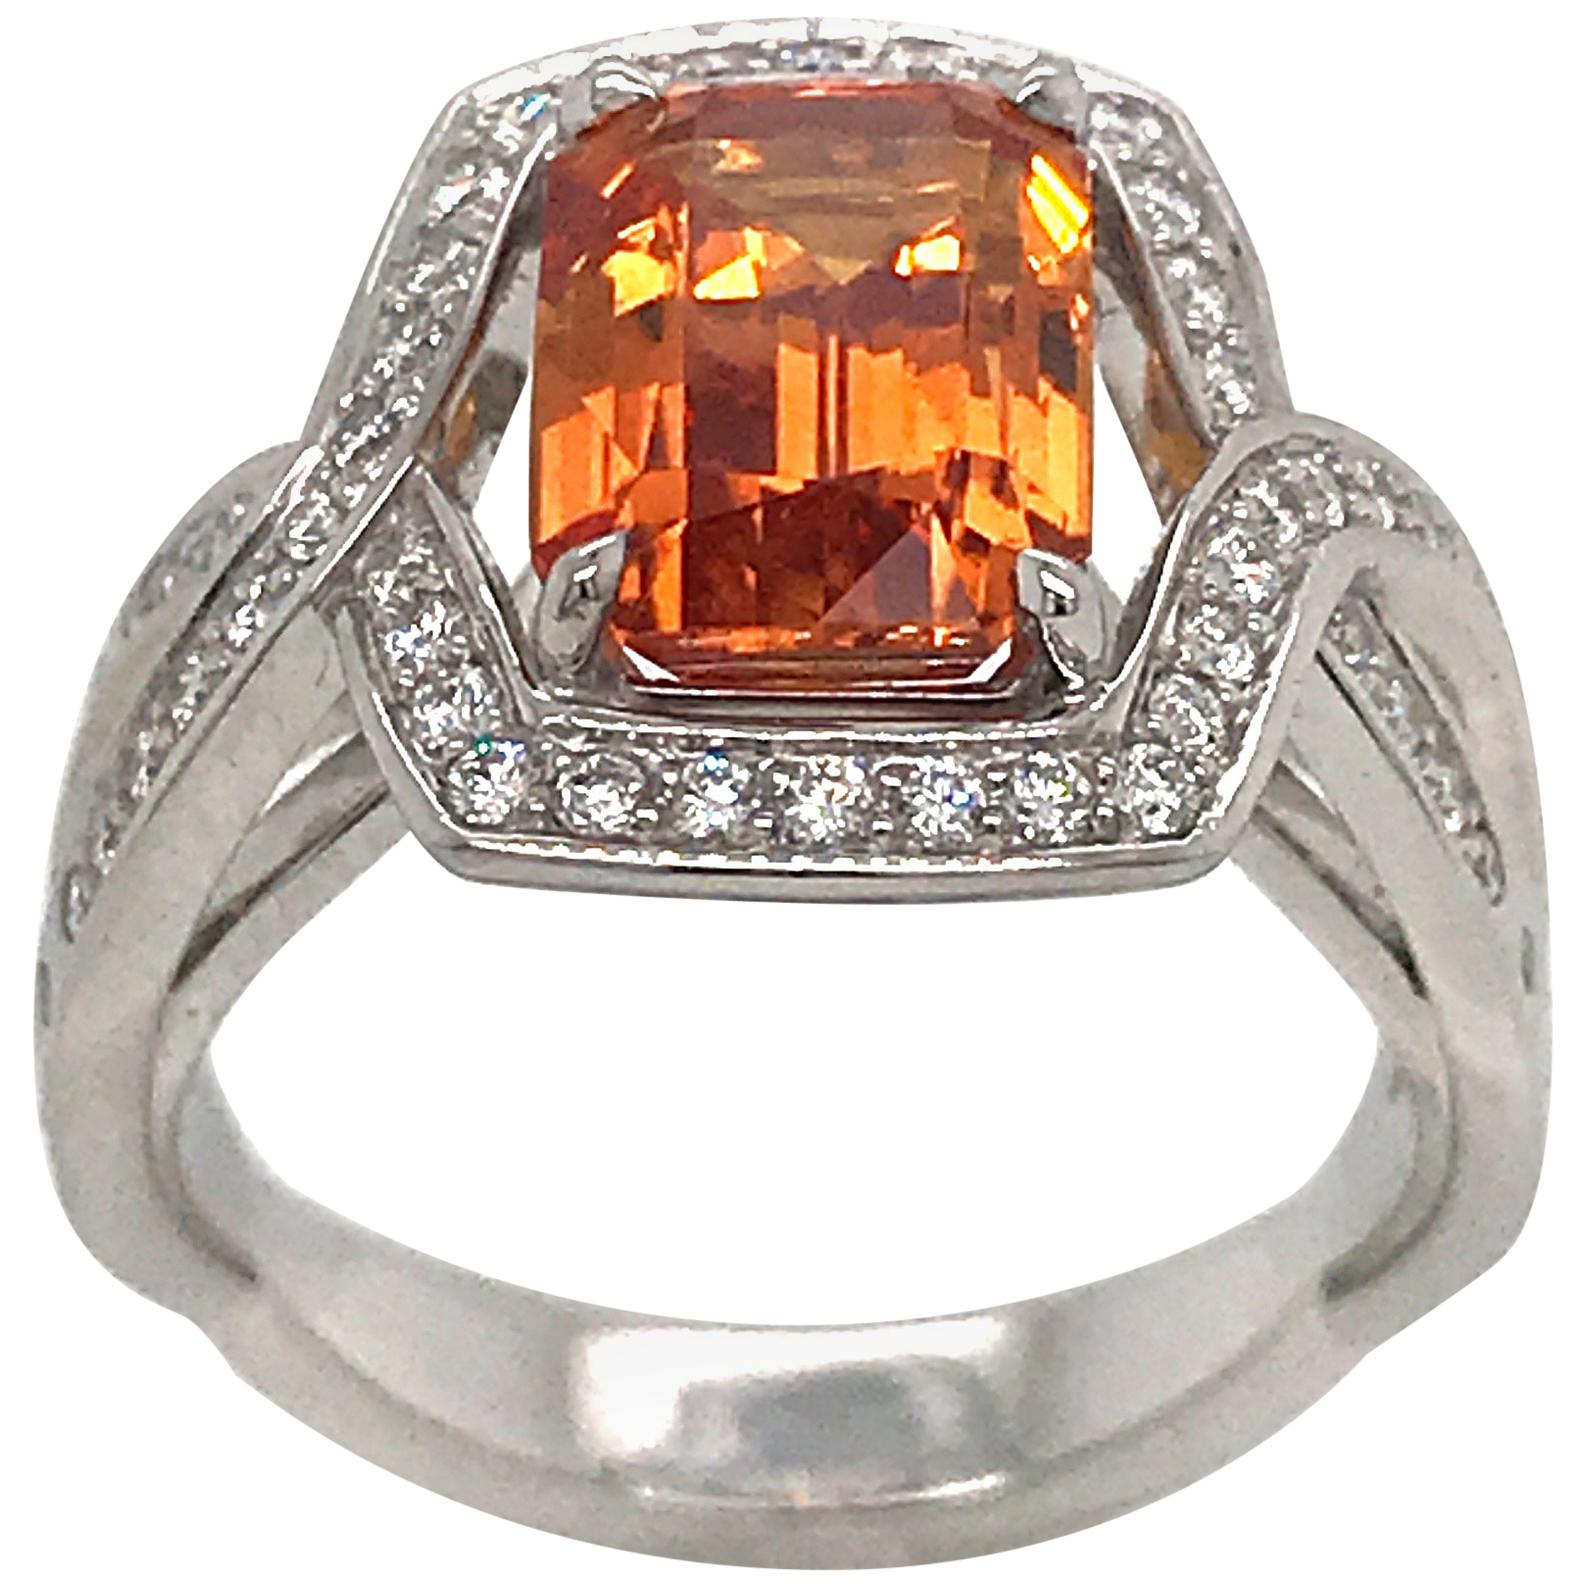 Orange Sapphire 3.84 Carat with Diamond in White Gold Ring